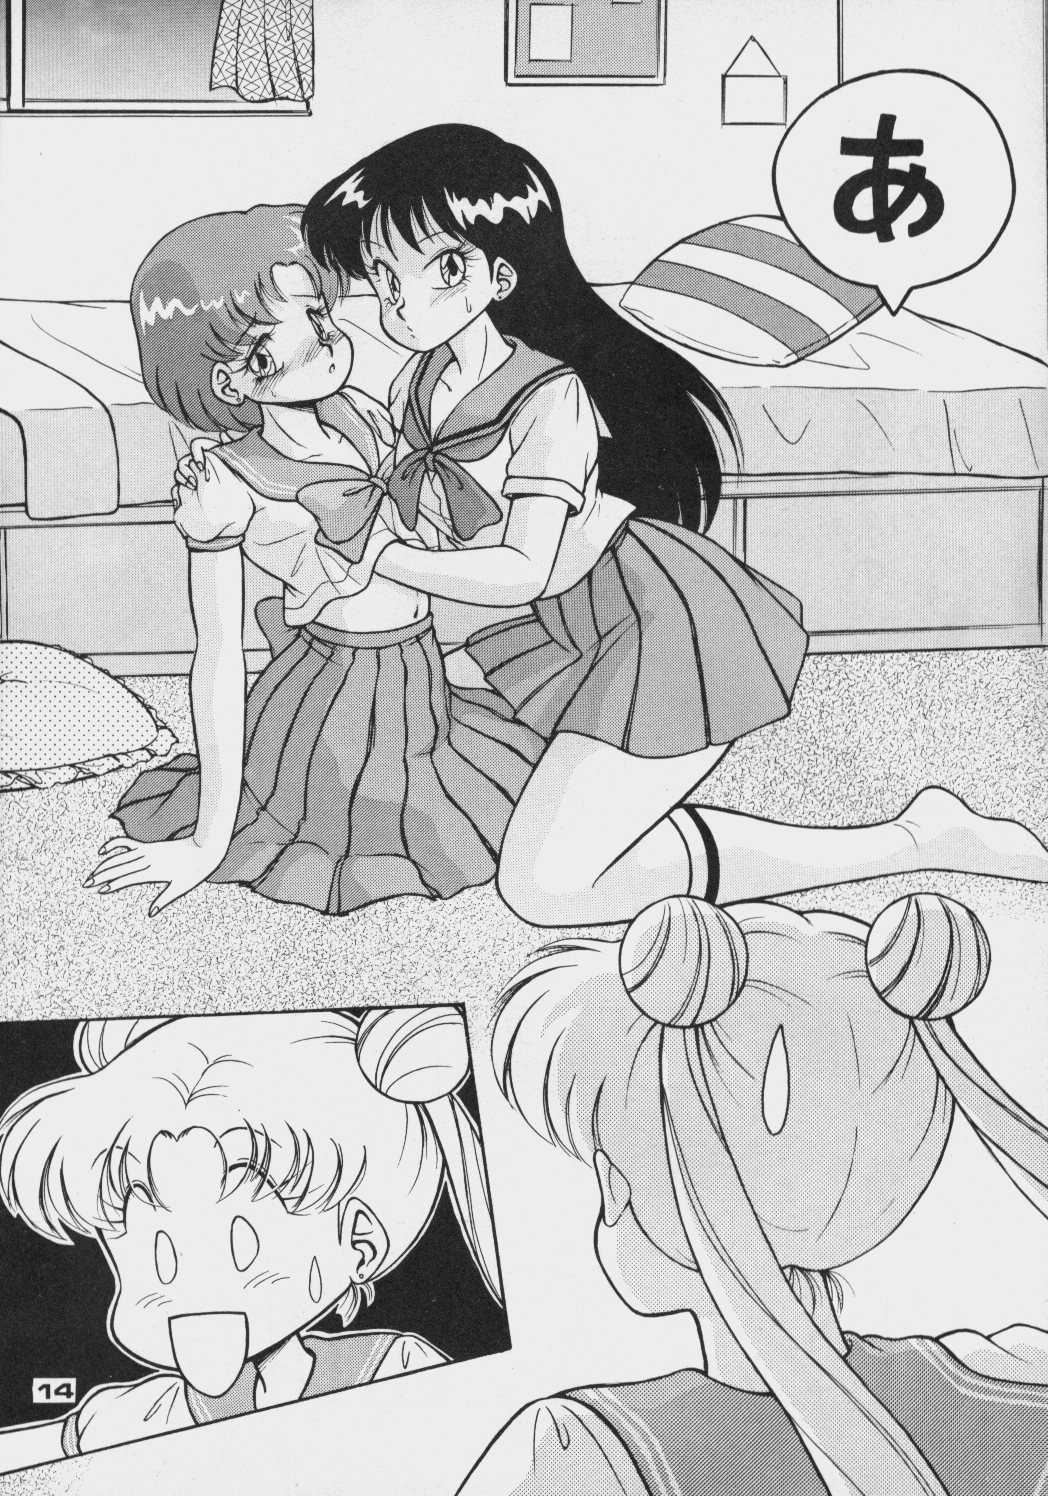 Da Konbaata 5 [Sailor Moon] 